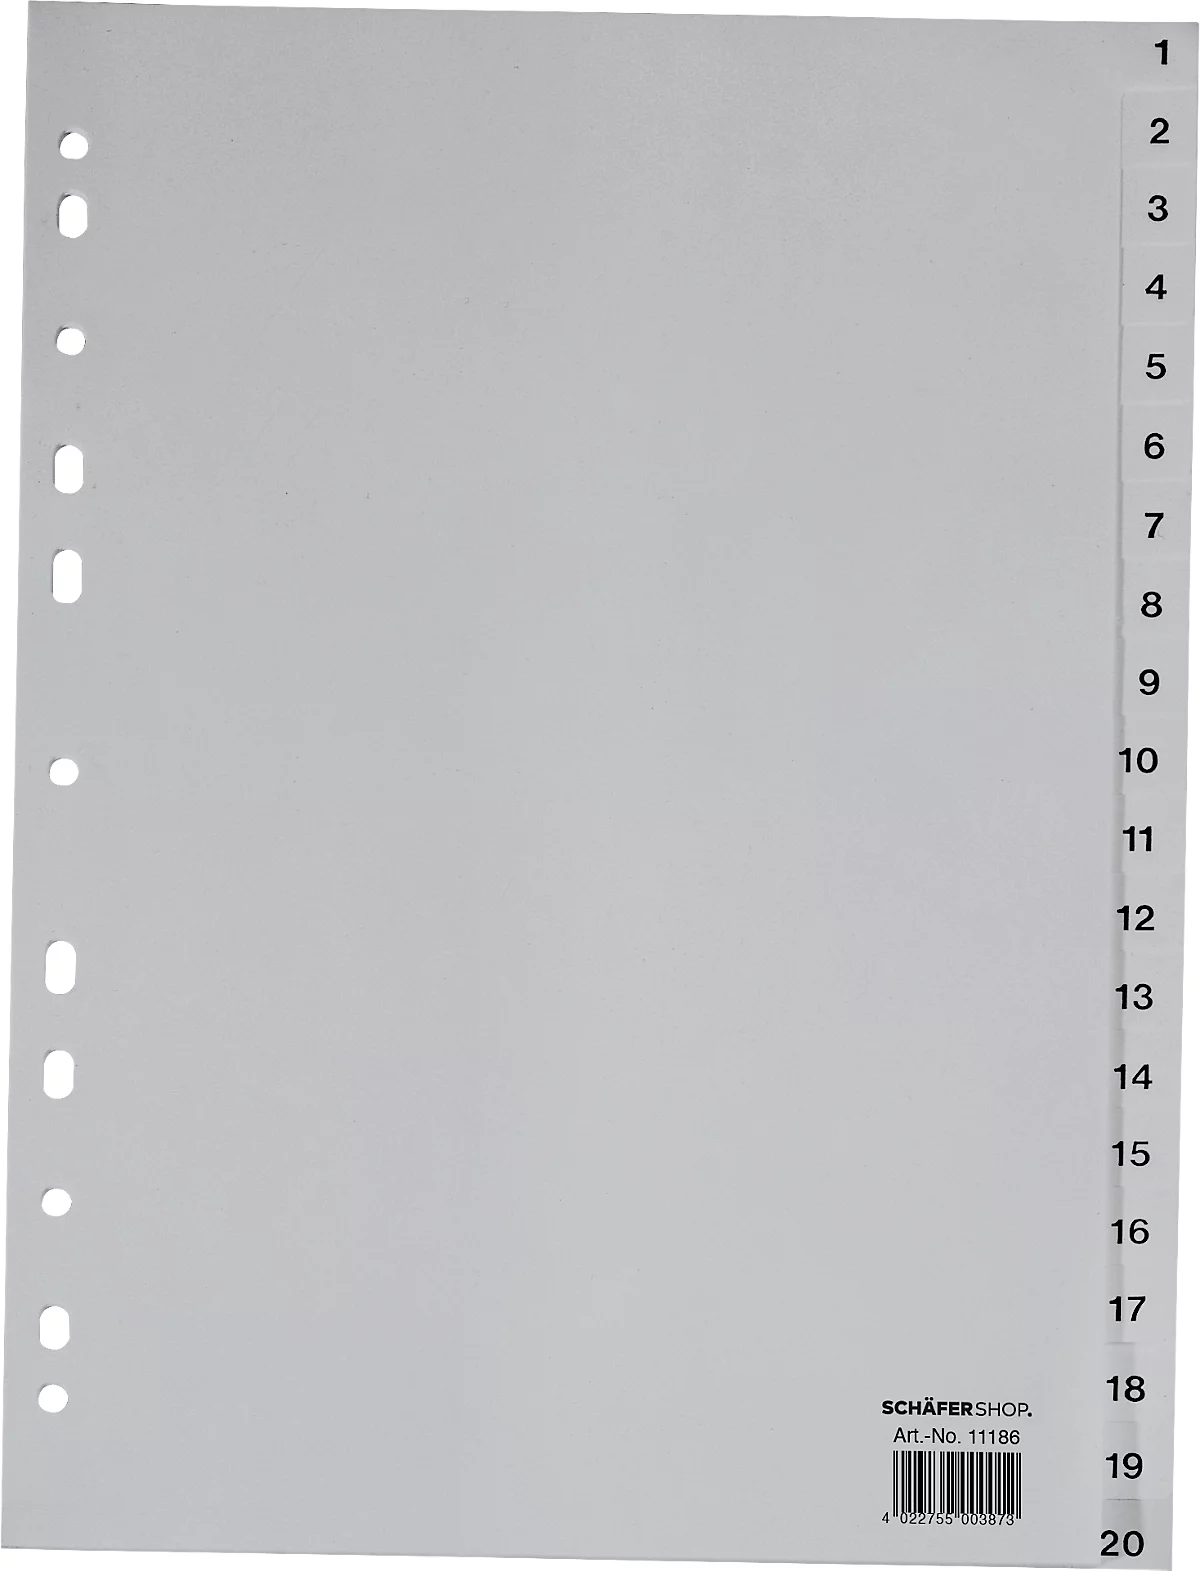 Schäfer Shop Select Etiquetas de PP para carpetas, formato completo DIN A4, números 1-20, gris